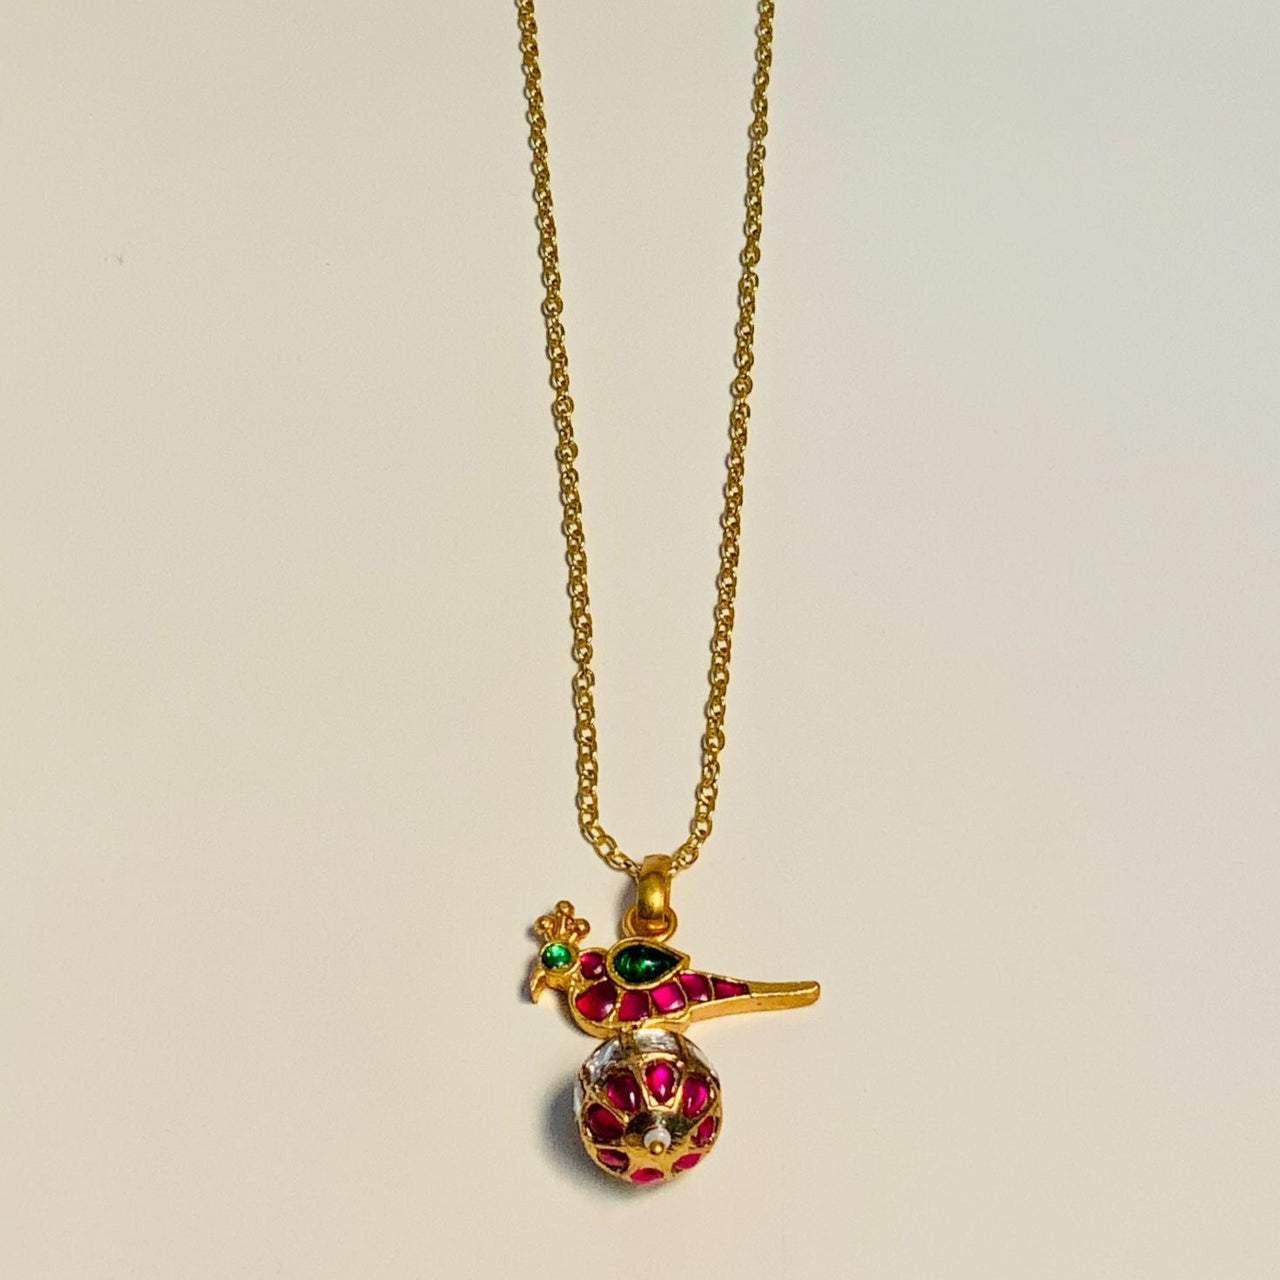 Antique High Quality Gold Plated Pachi Kundan Pendant Chain - Abdesignsjewellery